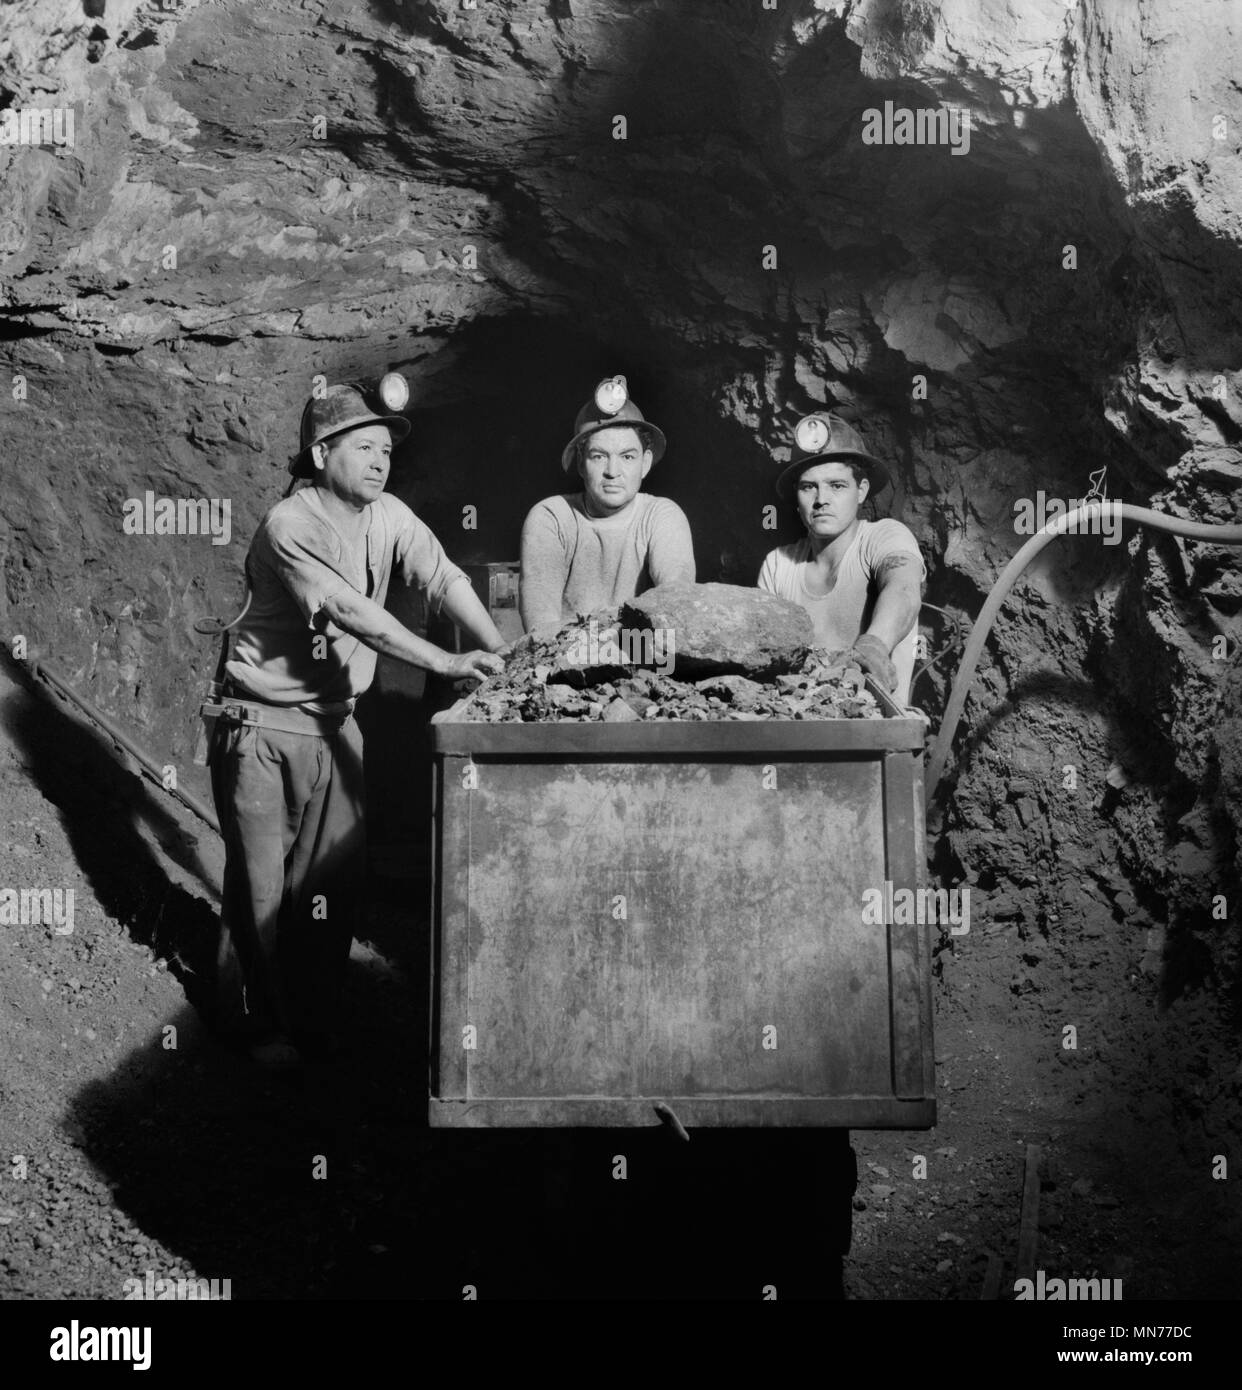 Three Miners Loading Mercury Ore into Mine Car by Hand, Quicksilver Mining Company, New Idria, California, USA, Andreas Feininger for Office of War Information, December 1942 Stock Photo